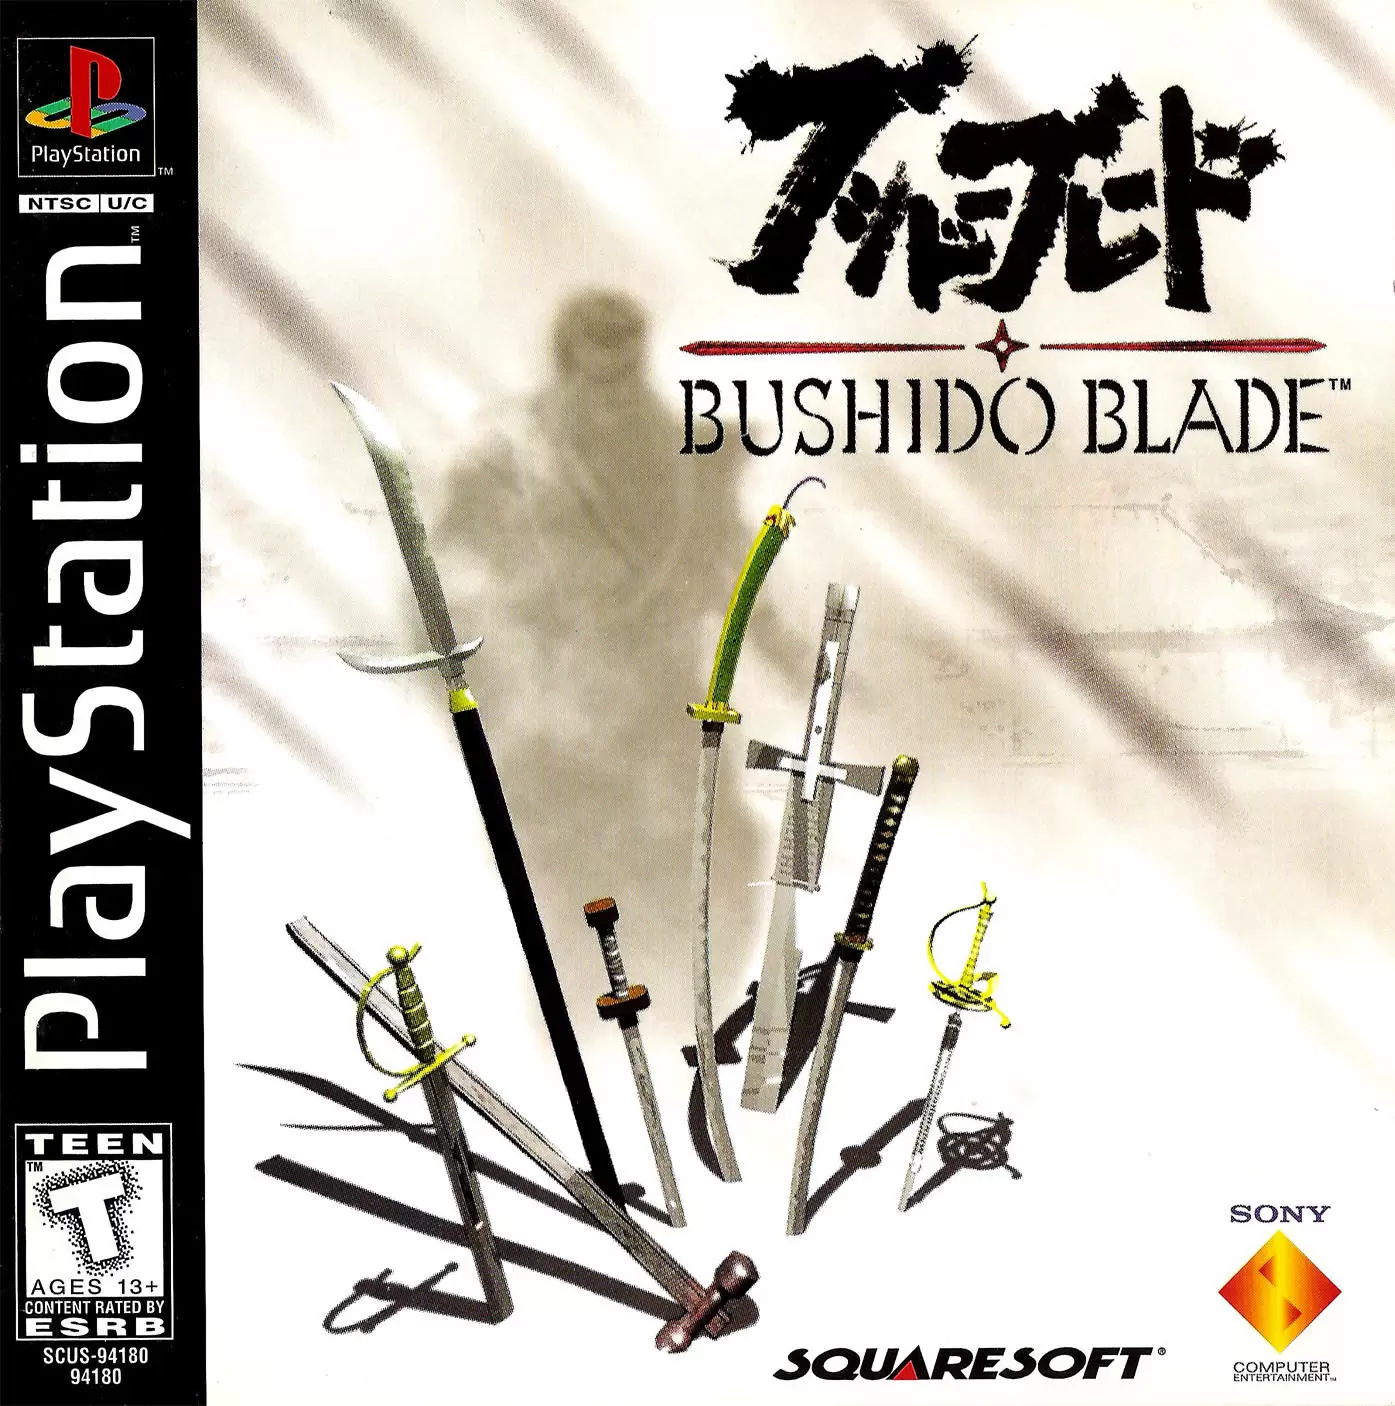 Playstation games - Bushido Blade